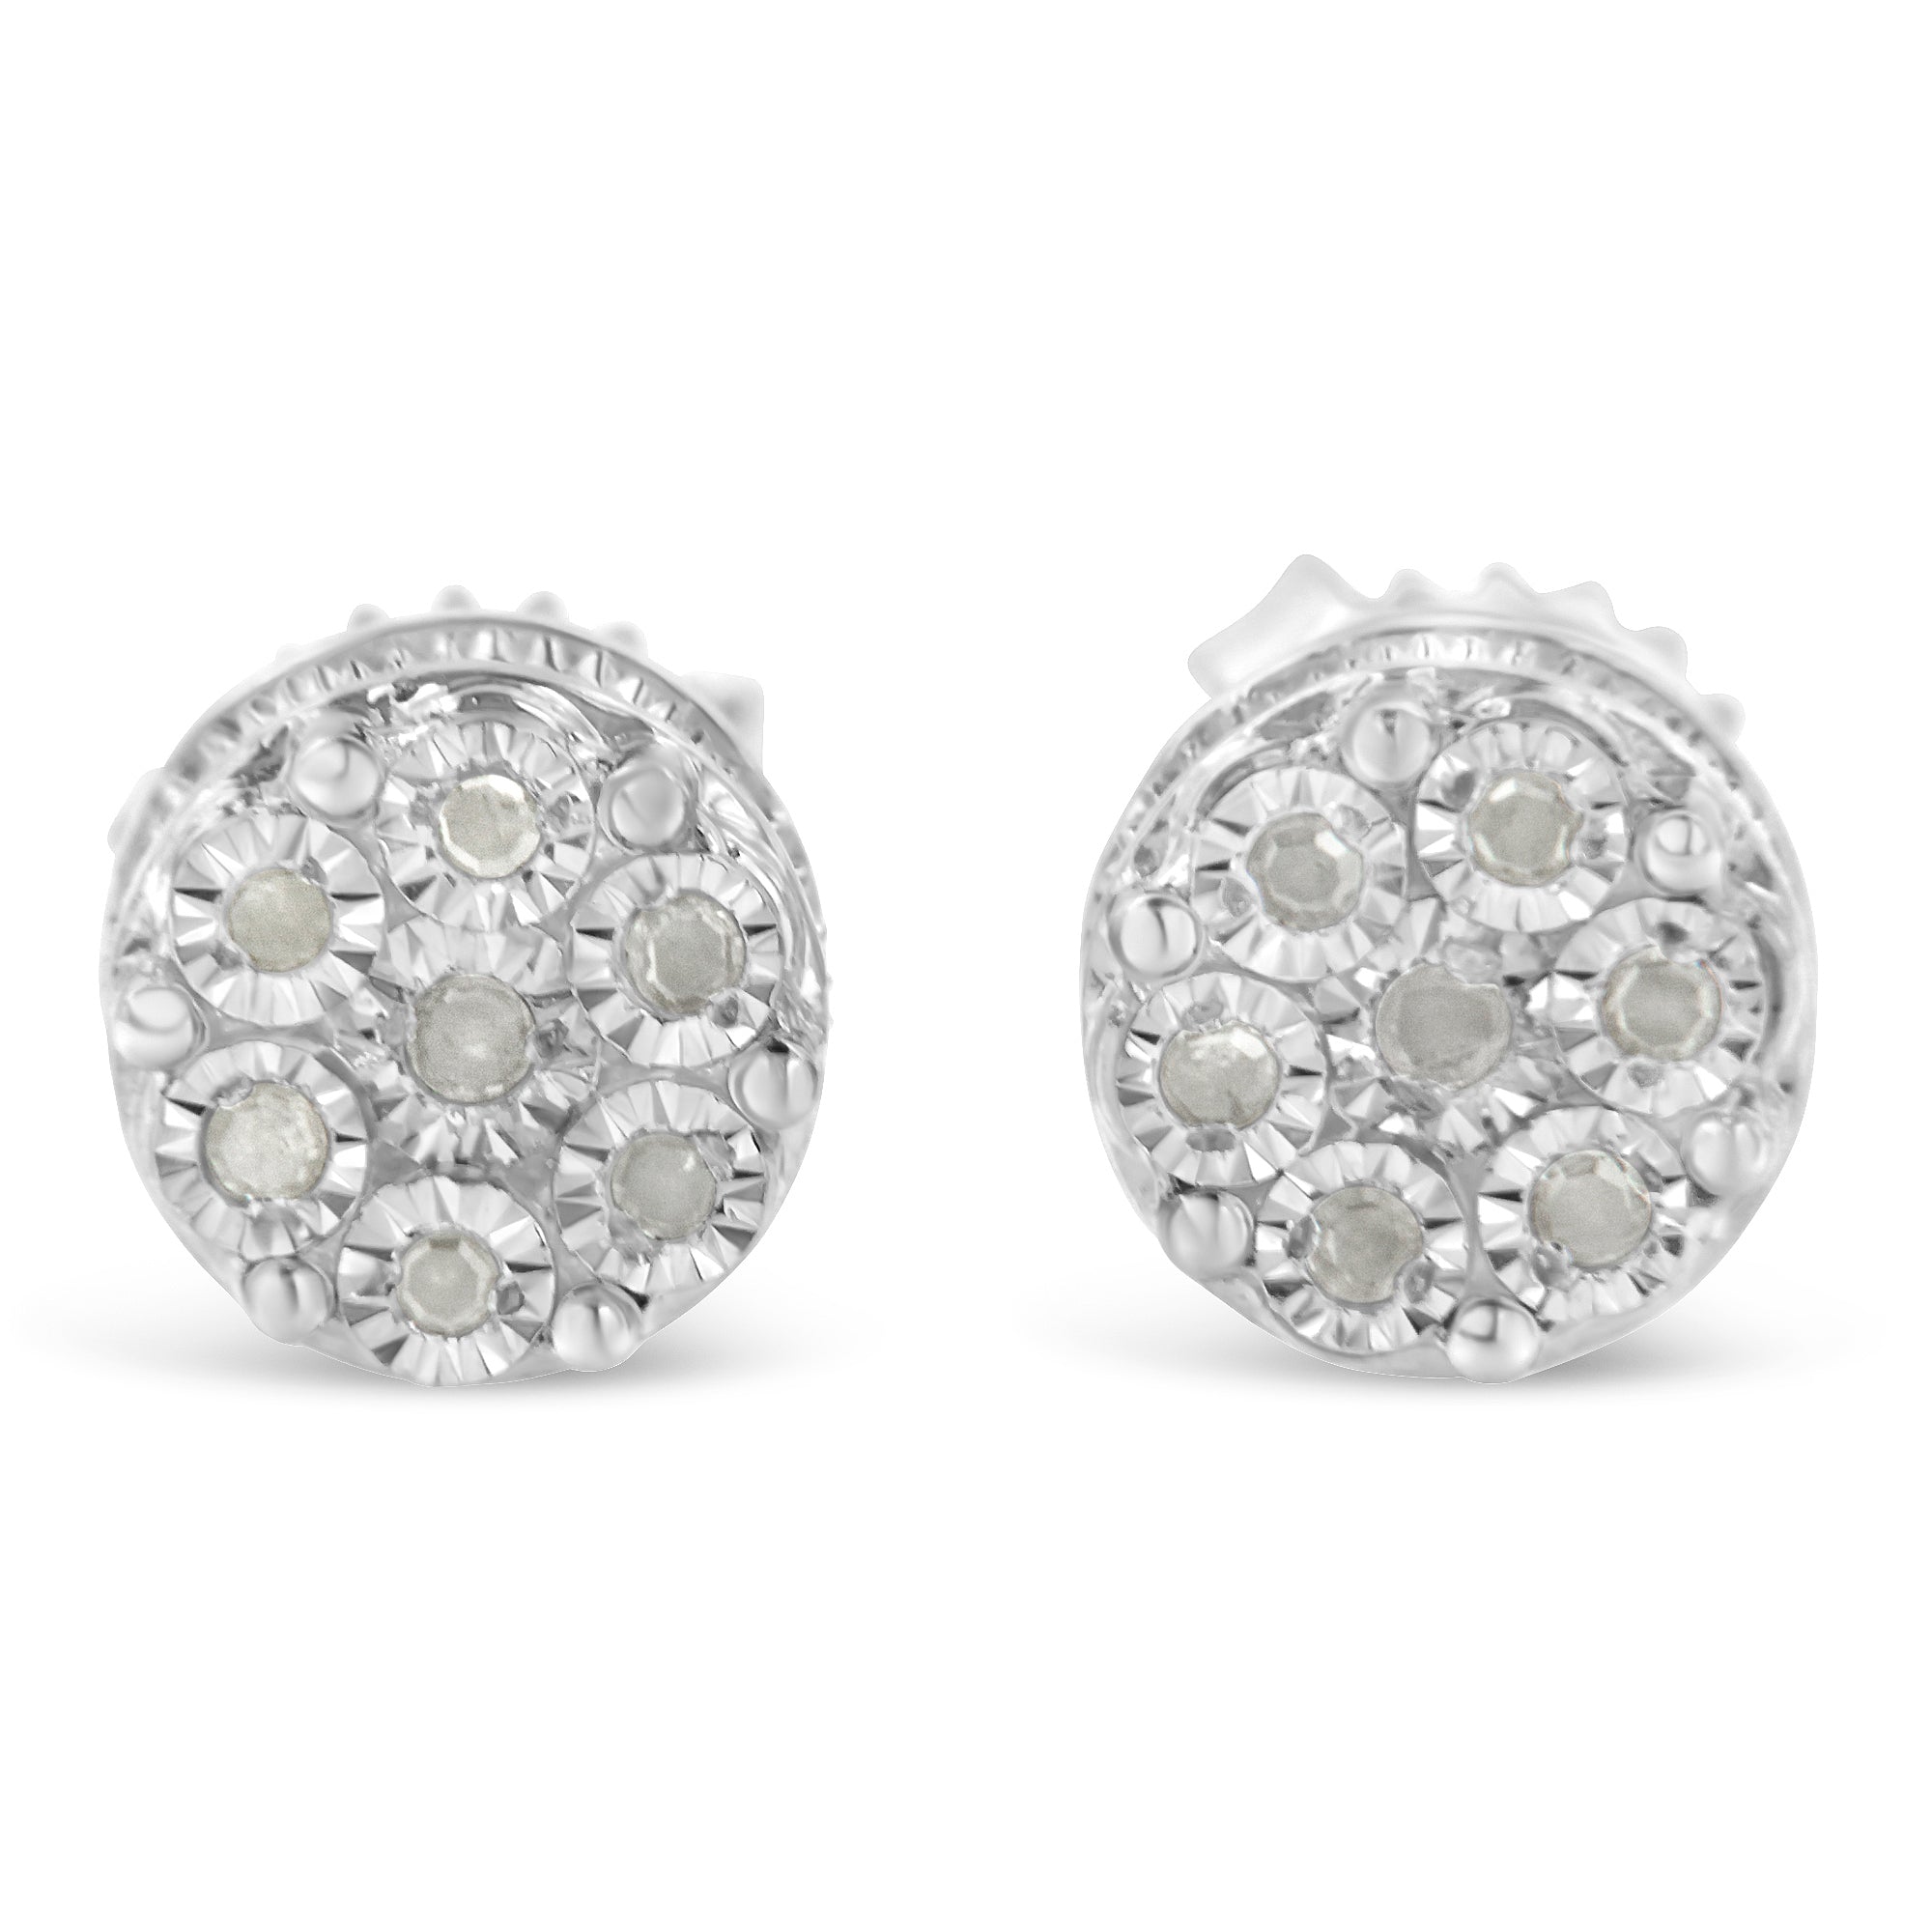 Sterling-Silver-Diamond-Cluster-Stud-Earrings-(0.15-Cttw,-I-J-Color,-I3-Clarity)-Earrings